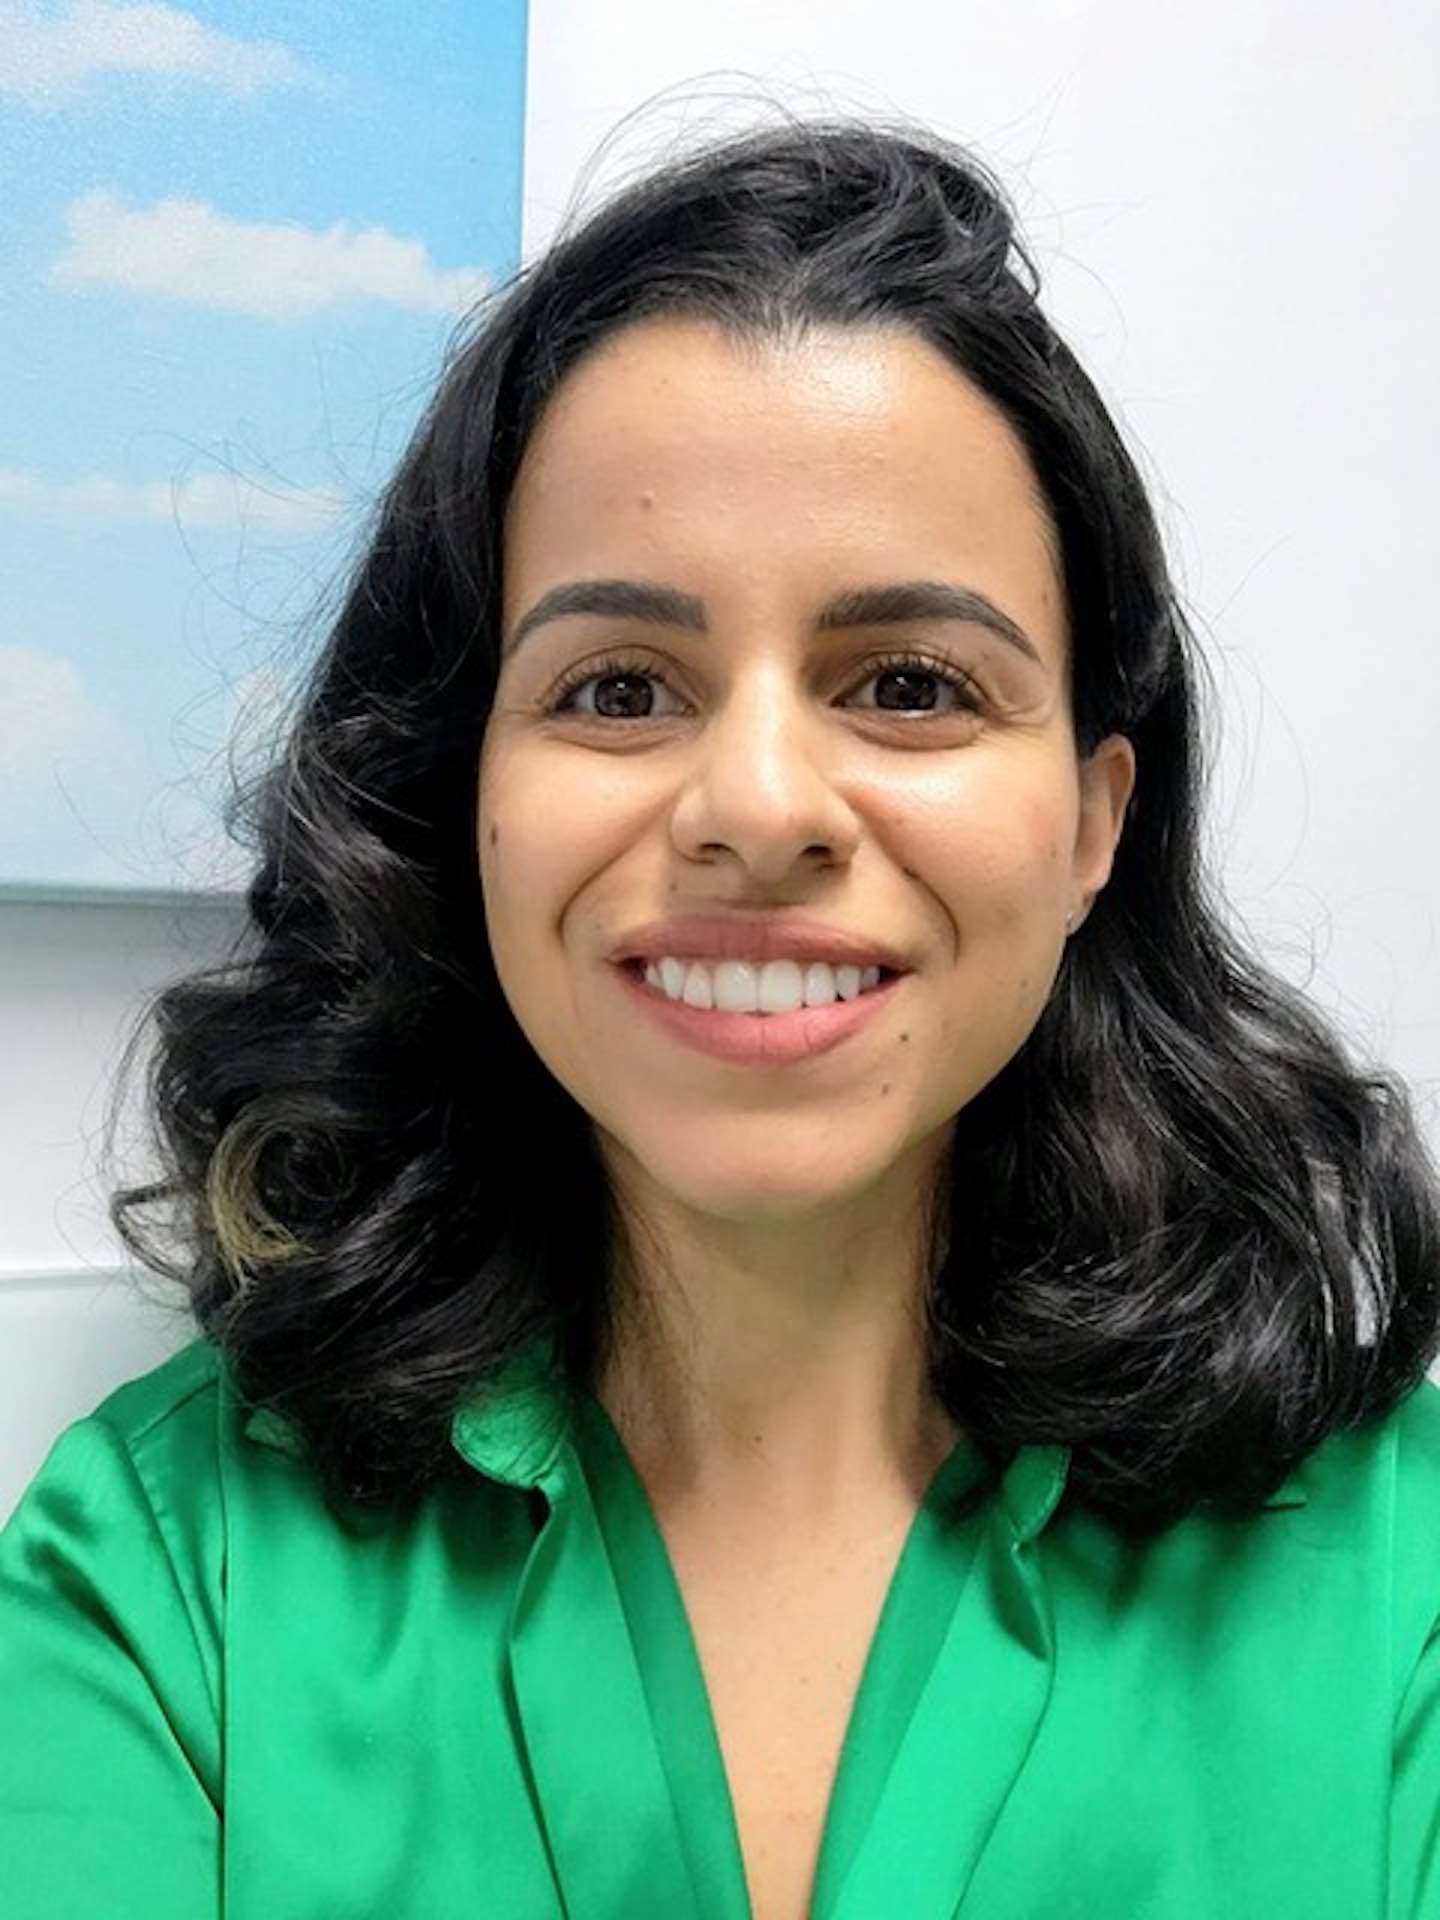 Jessica Alves Lopes - Psychologist at The Self Centre Psychology Practice